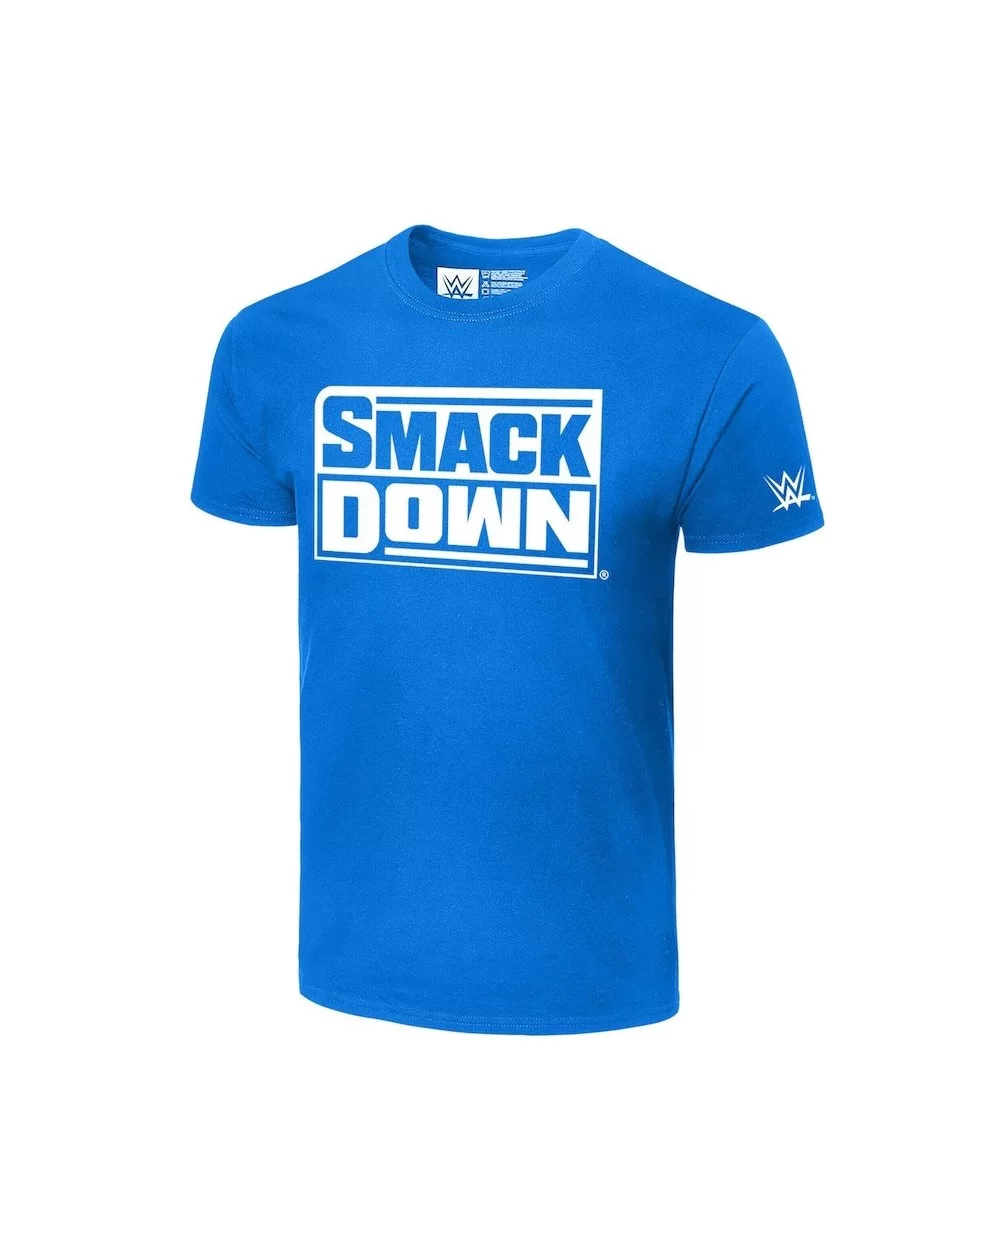 Men's Royal WWE SmackDown Draft T-Shirt $9.84 T-Shirts